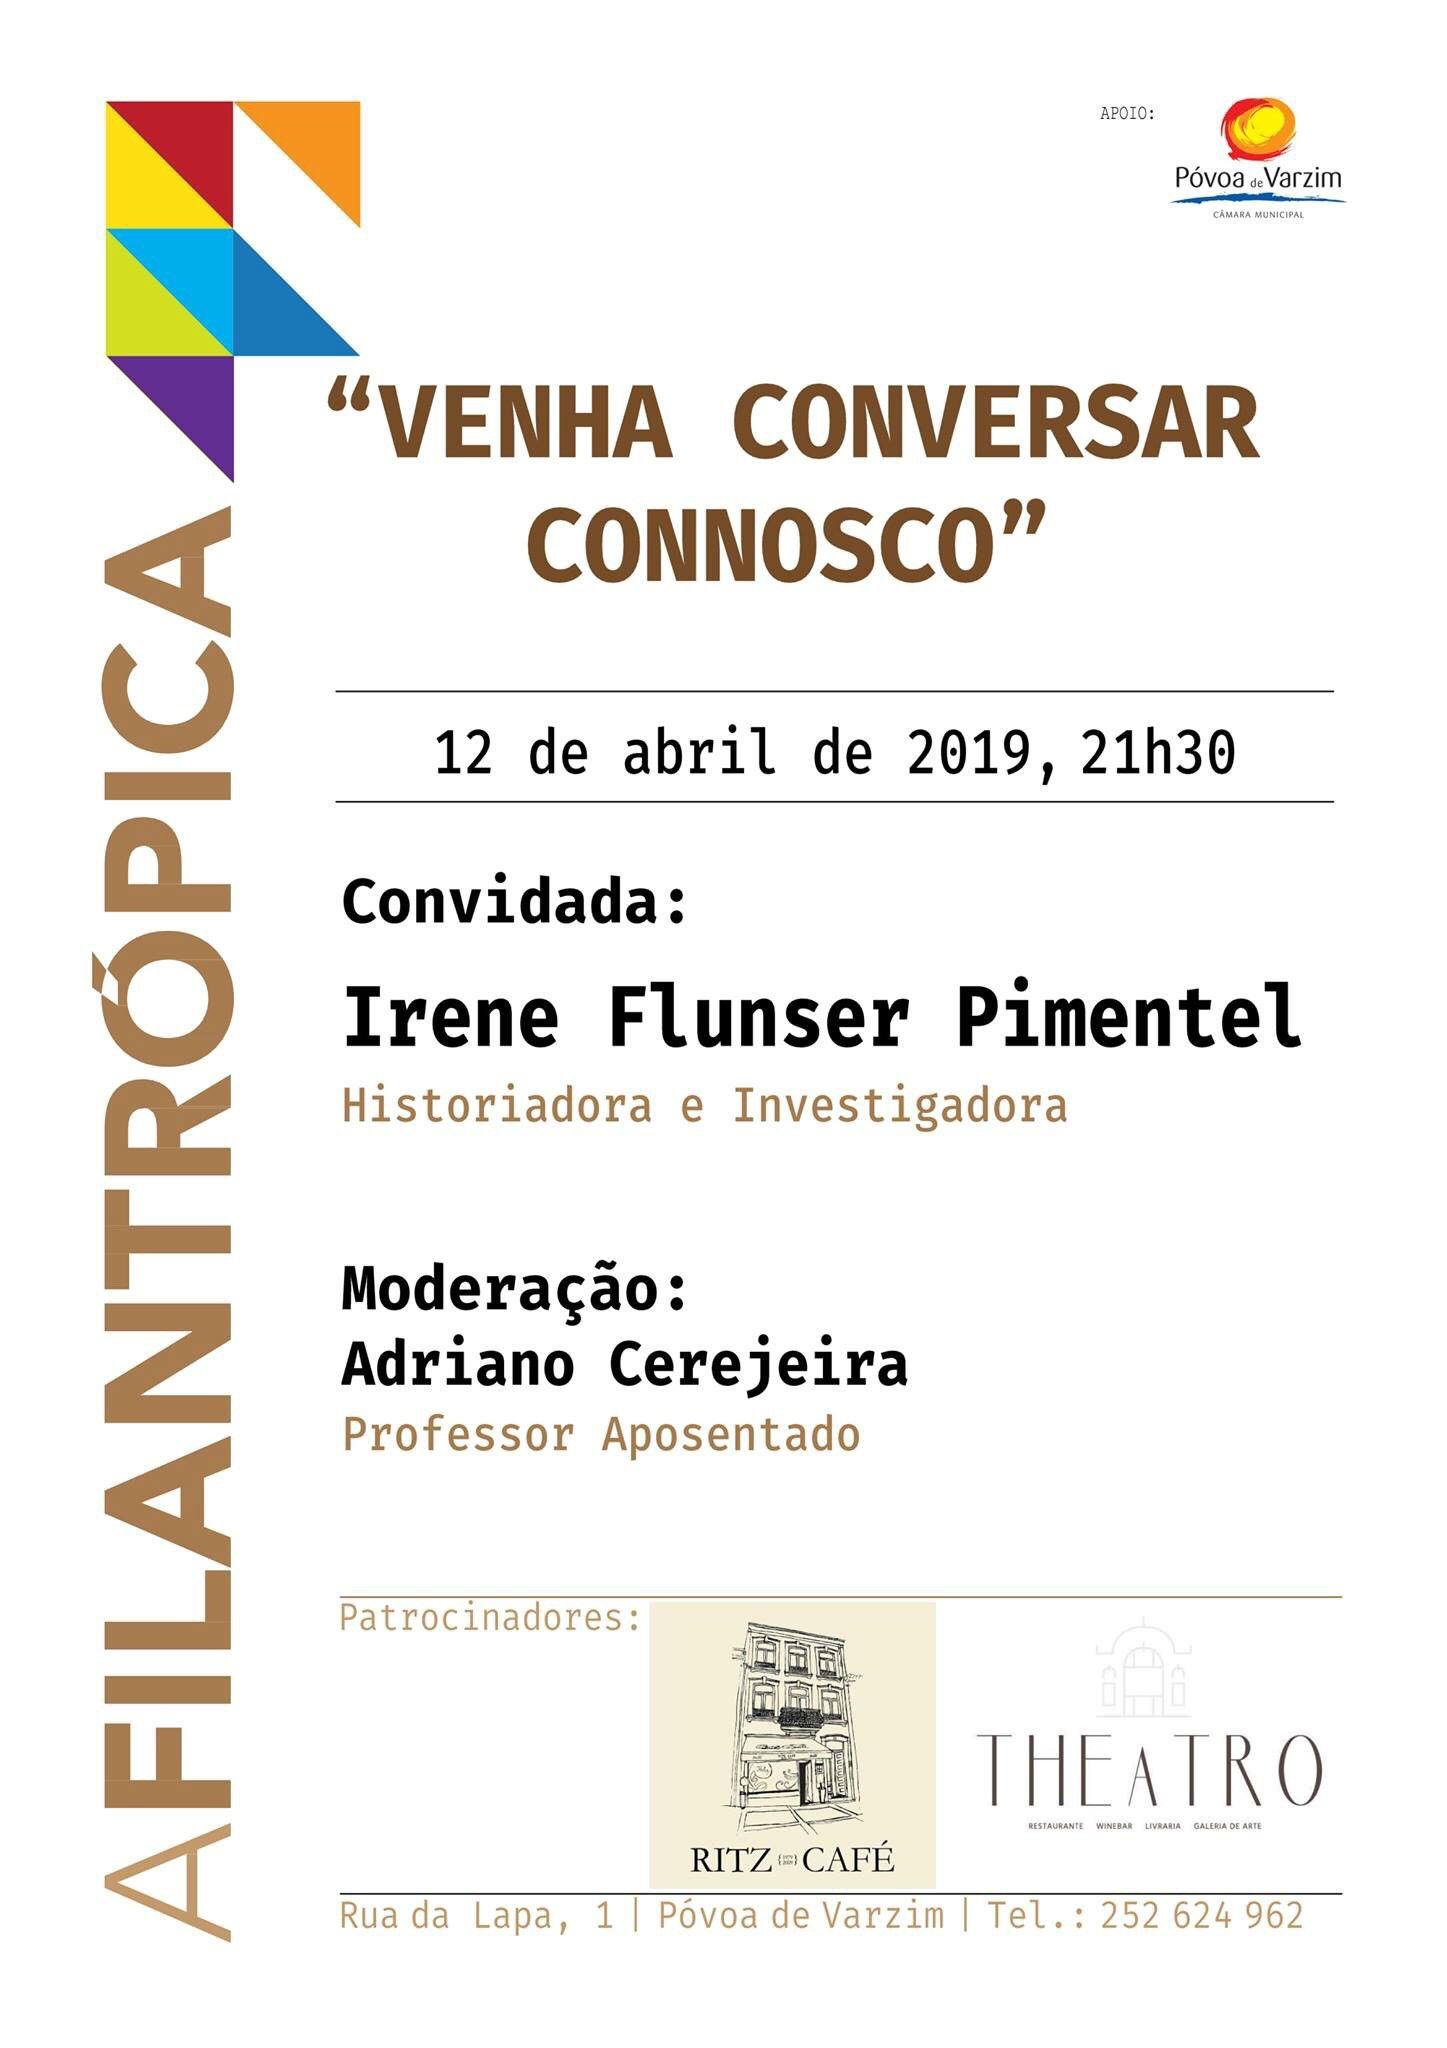 "Venha Conversar Connosco": Irene Flunser Pimentel